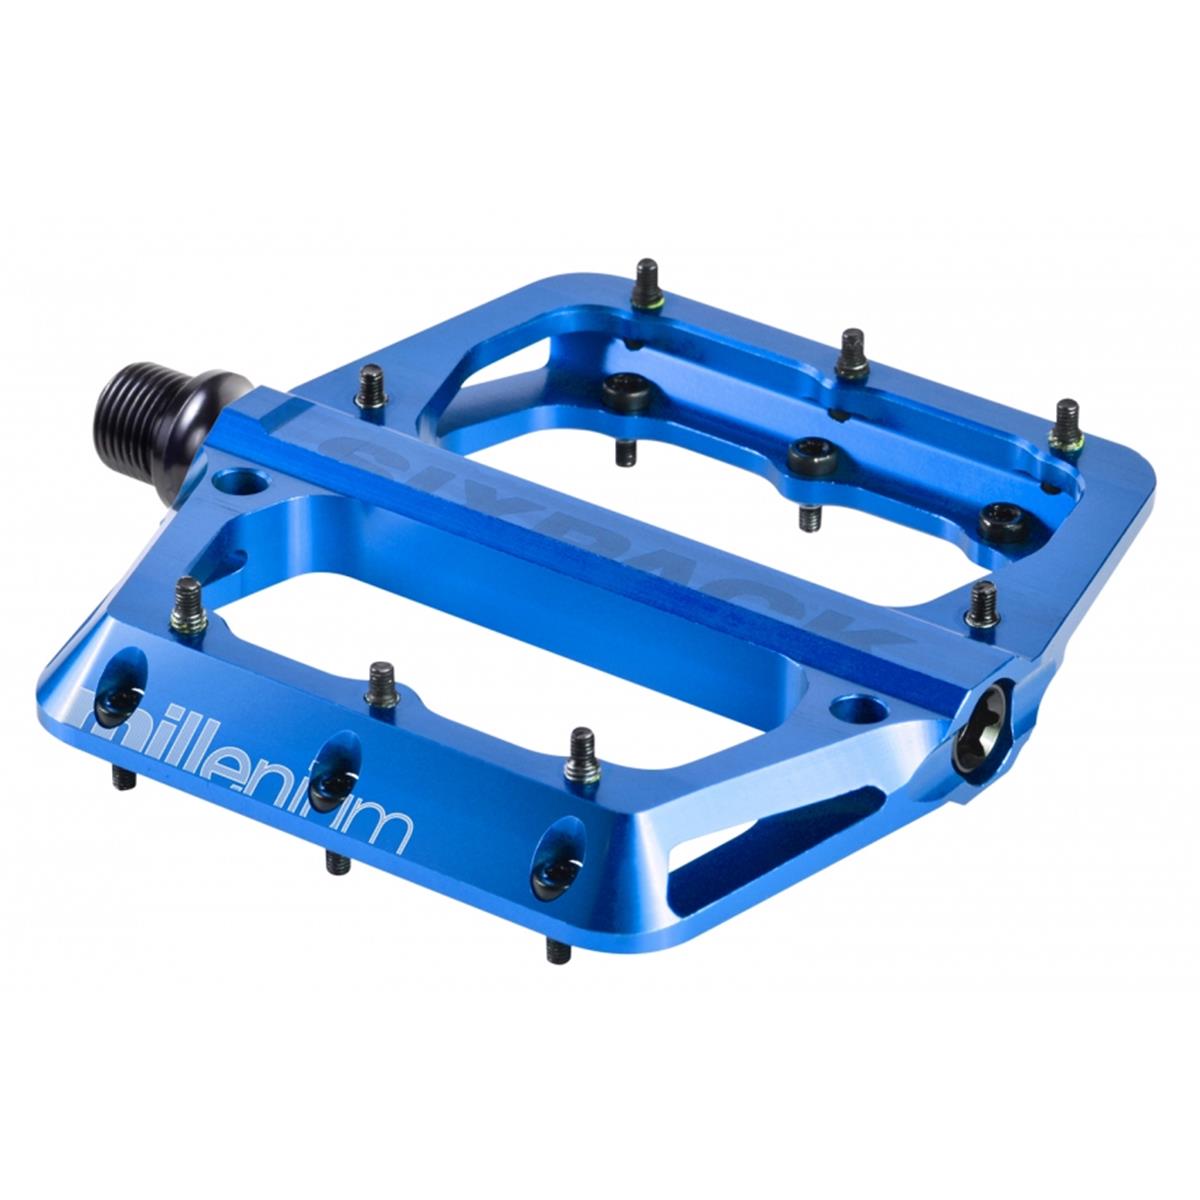 Sixpack Pedali Millenium 2.0 Blue, 105x110 mm, 32 M4 Pins, 1 Pair